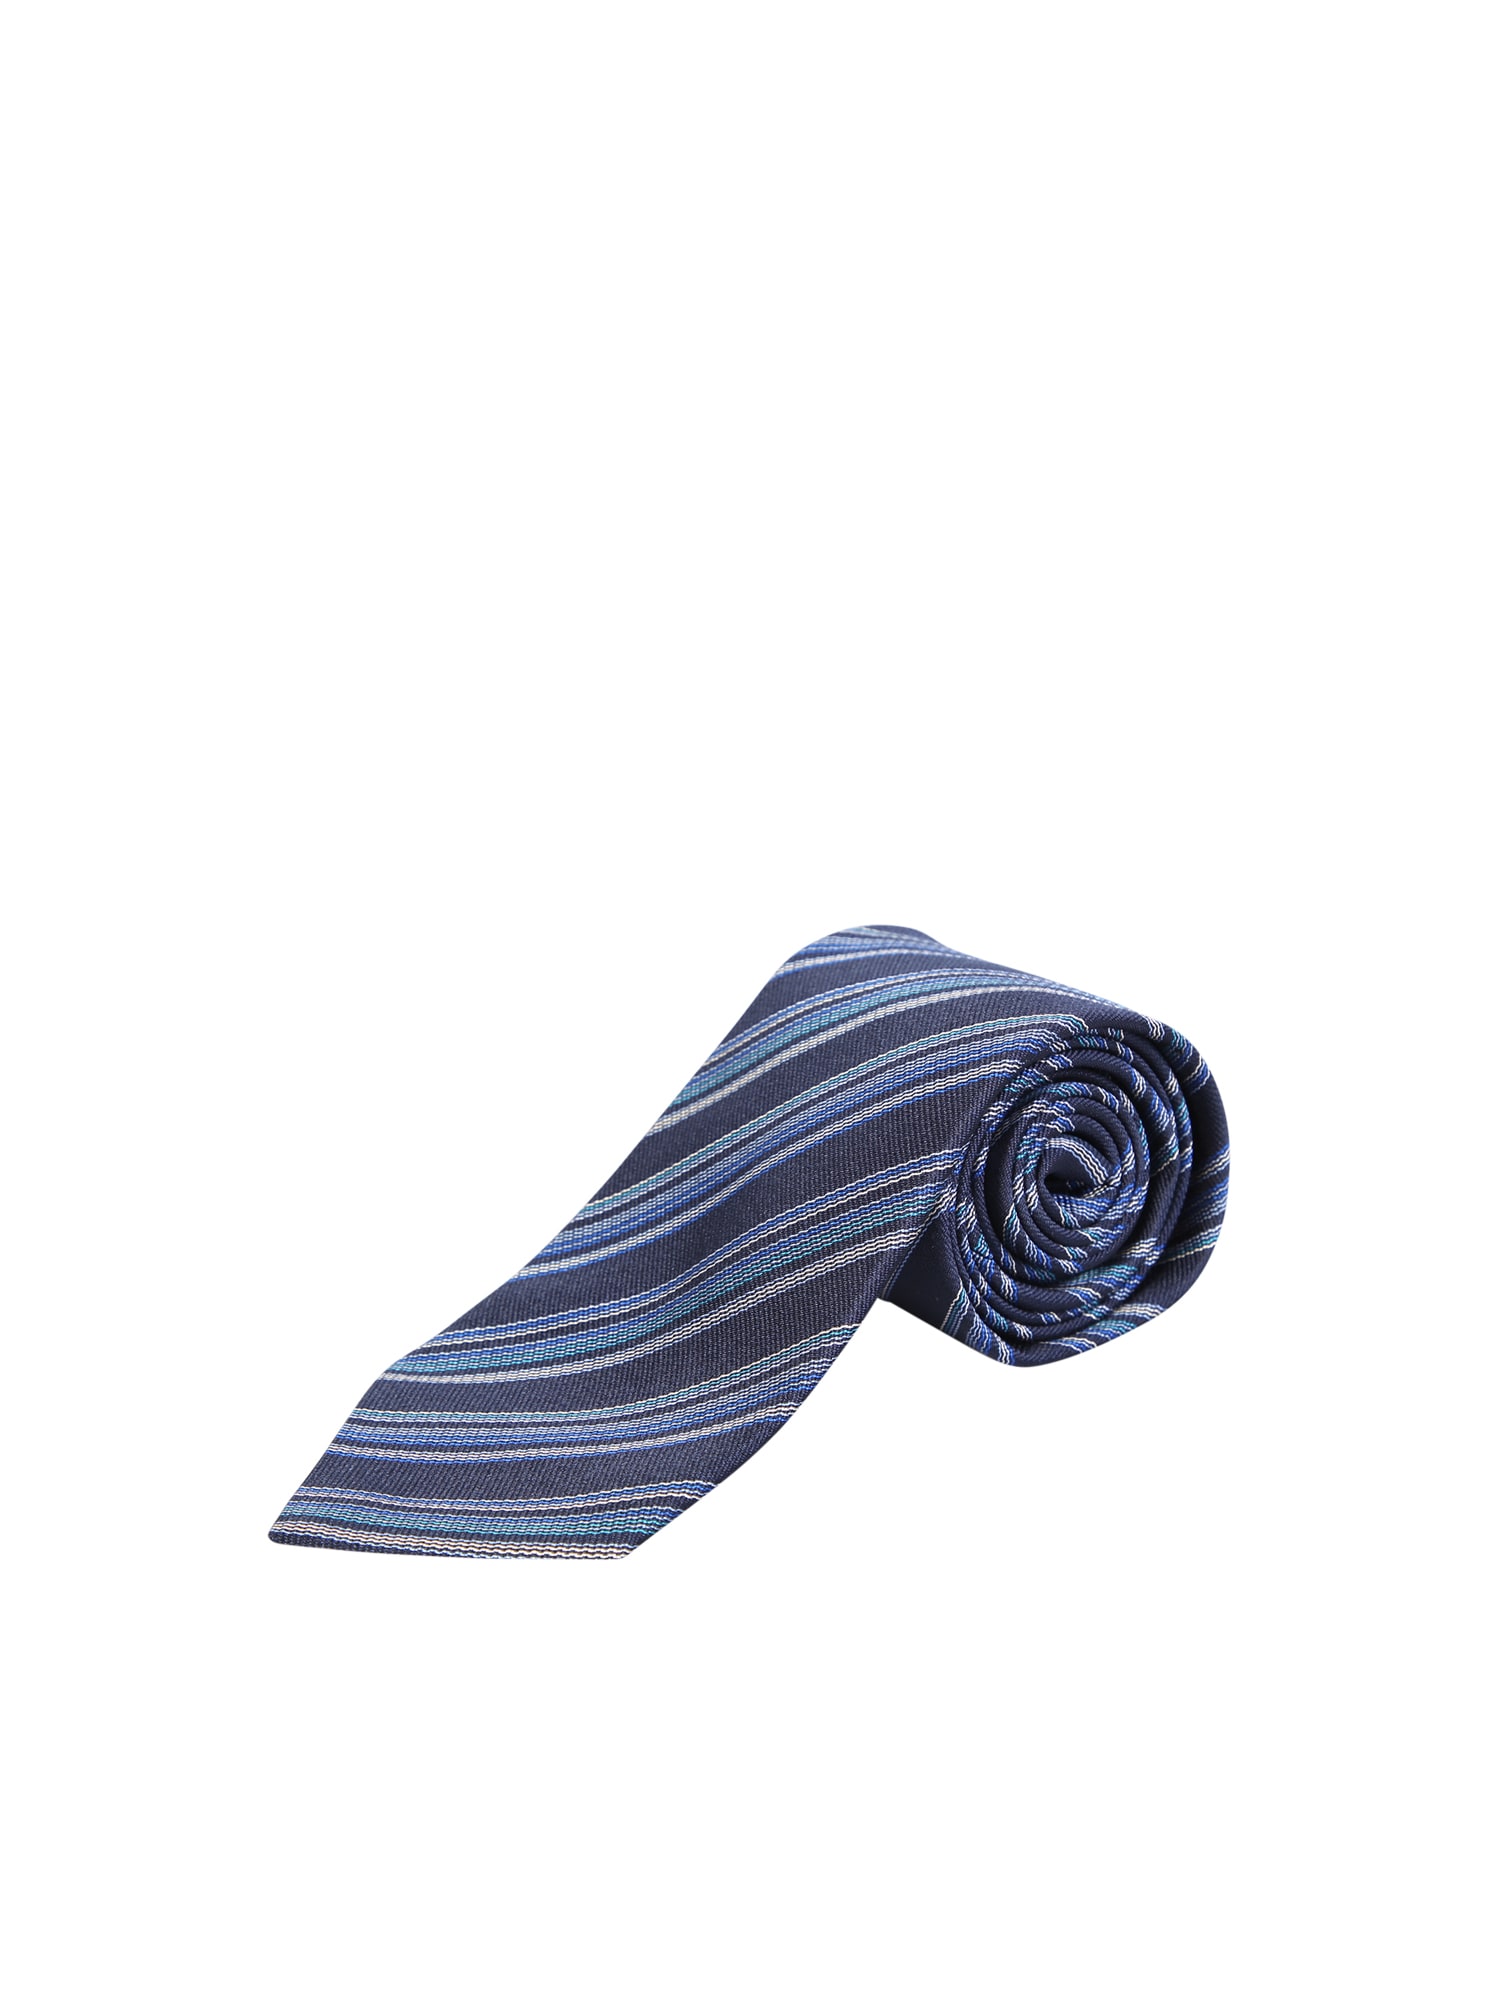 Paul Smith Blue Silk Tie